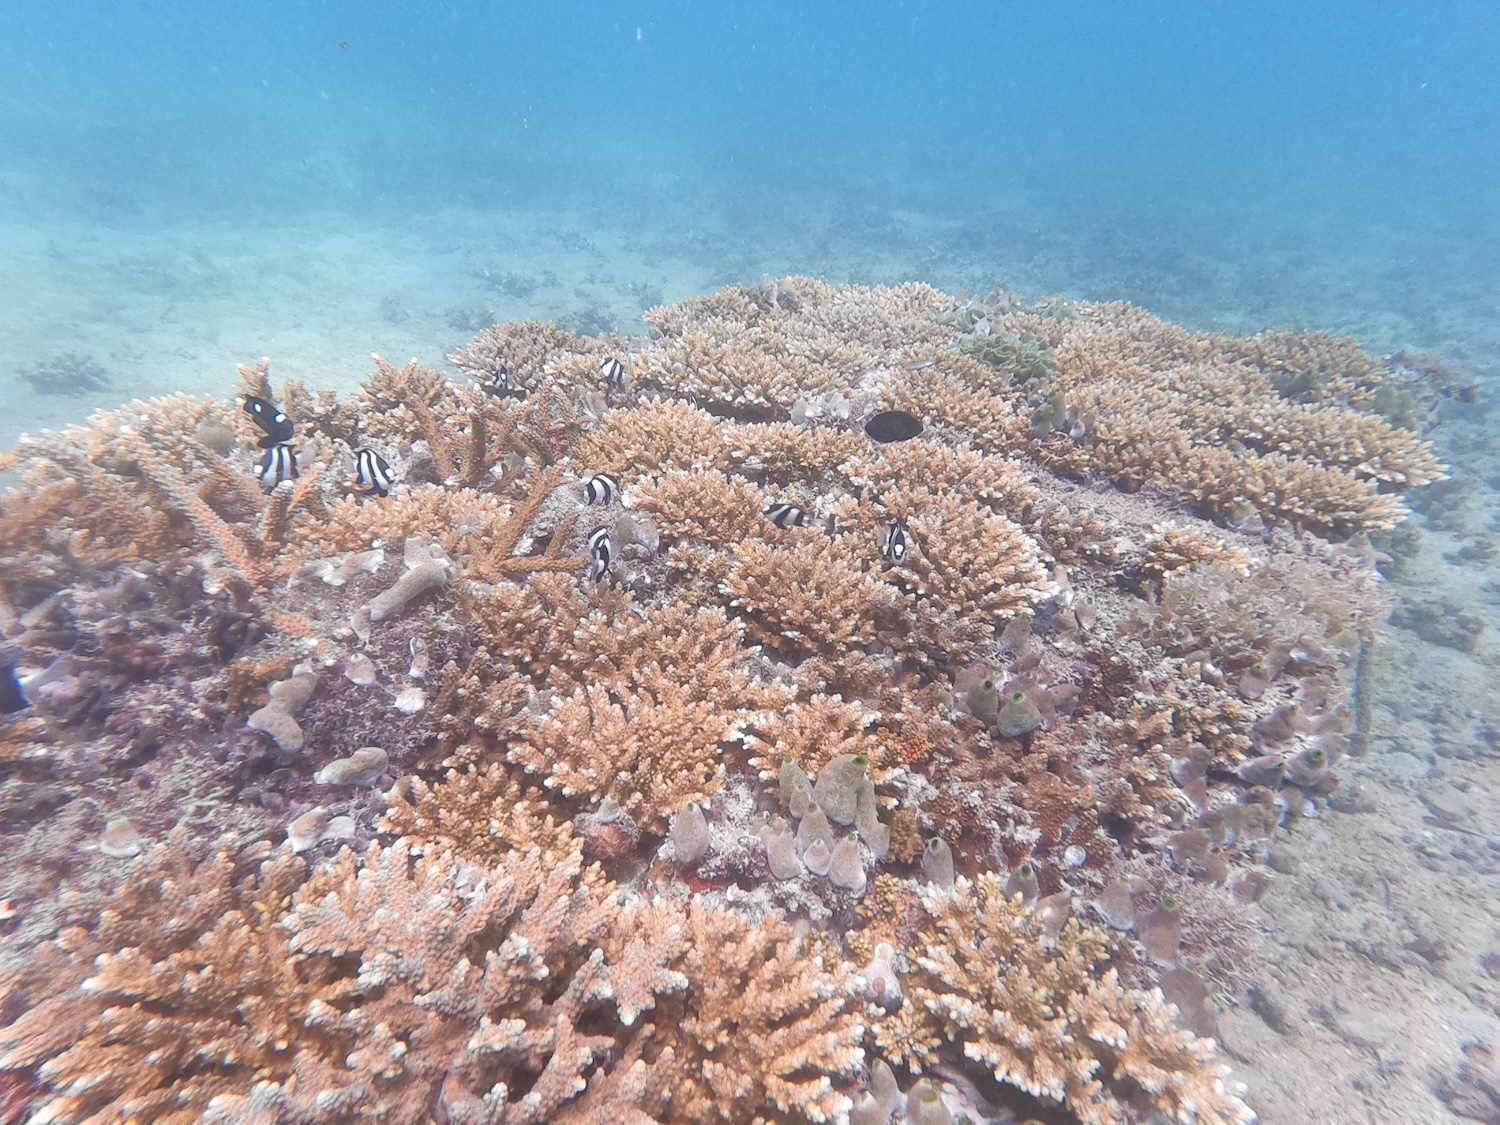 Table de coraux sur la pépinière d’Ankaranjelita, au nord de Toliara. Genre Acropora © Gildas/IH.SM